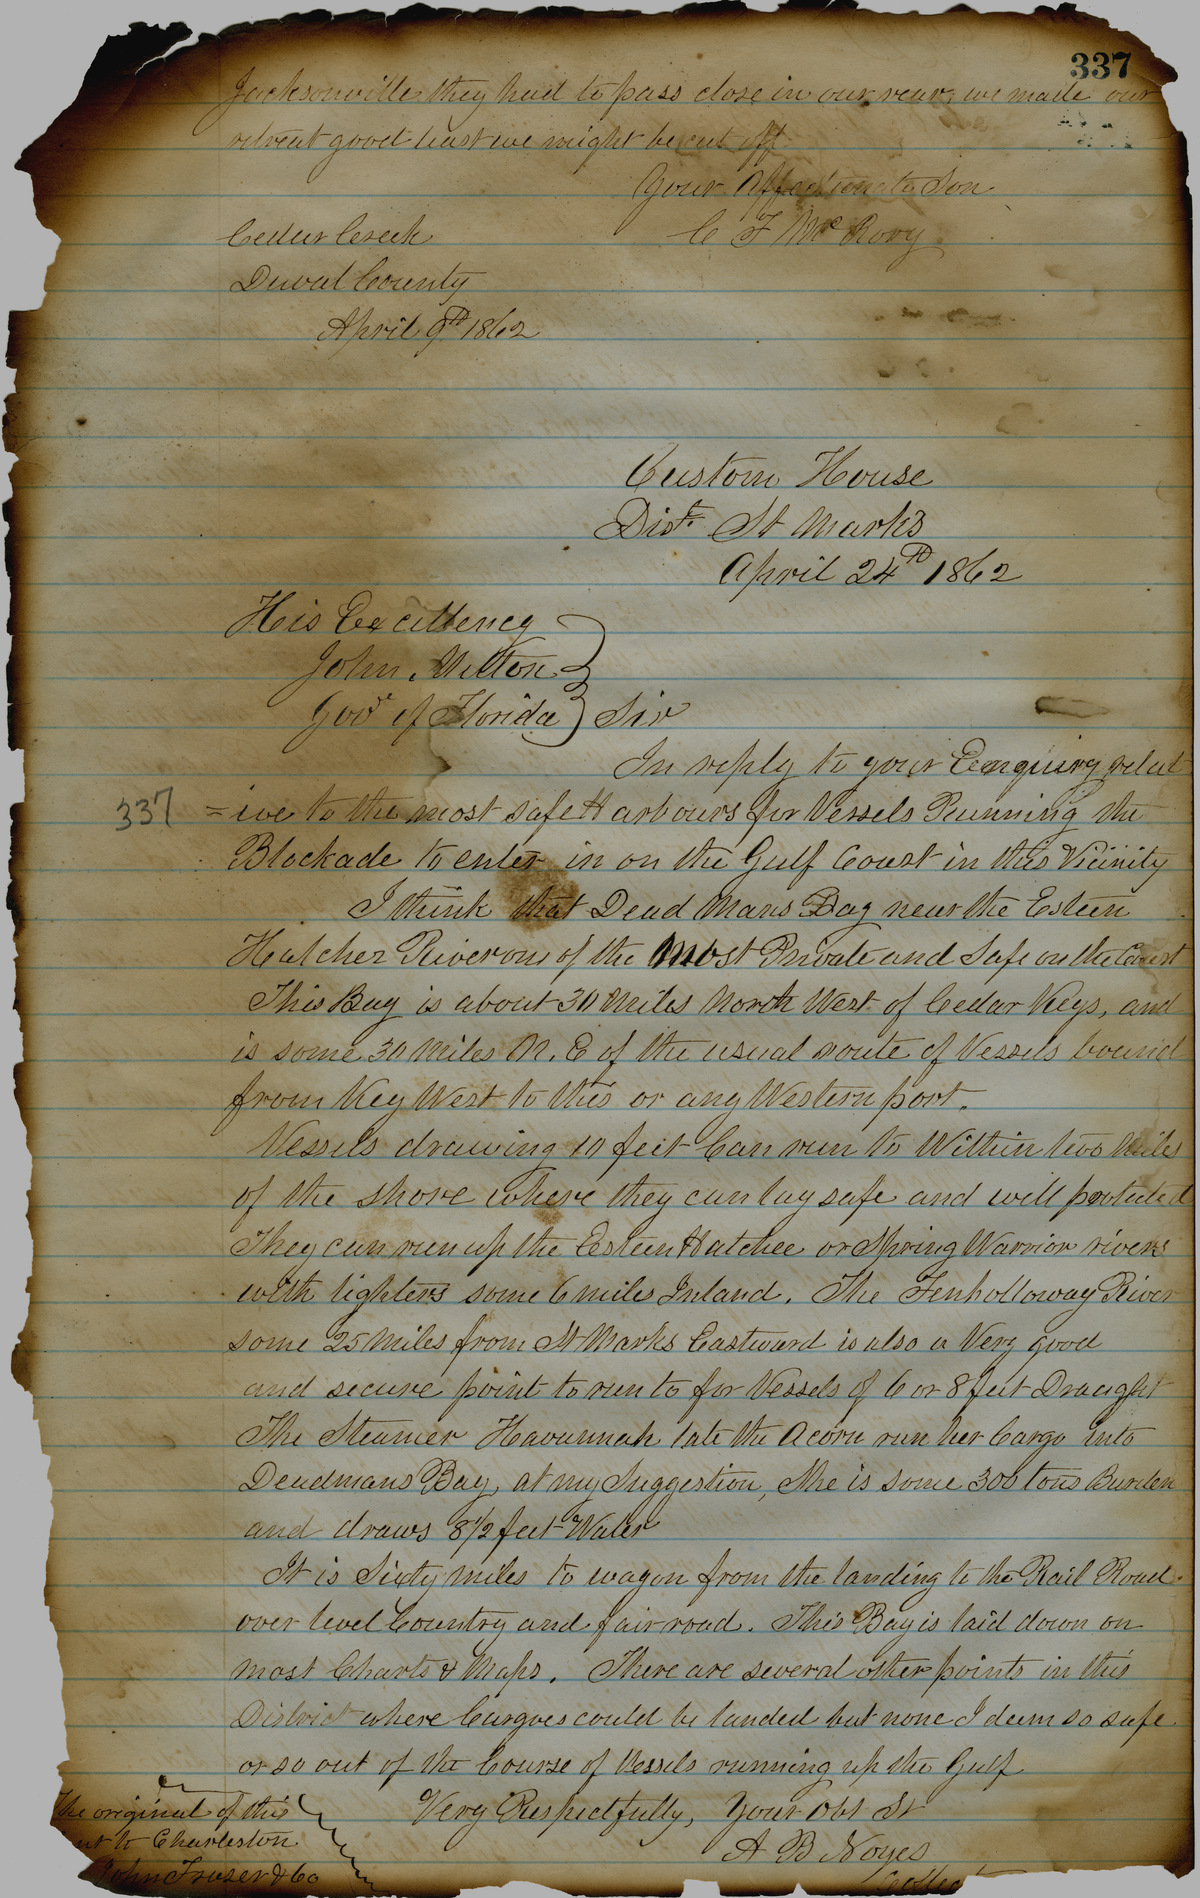 Milton Letterbook: April 13, 1862, letter describing Deadman's Bay importance in the Civil War